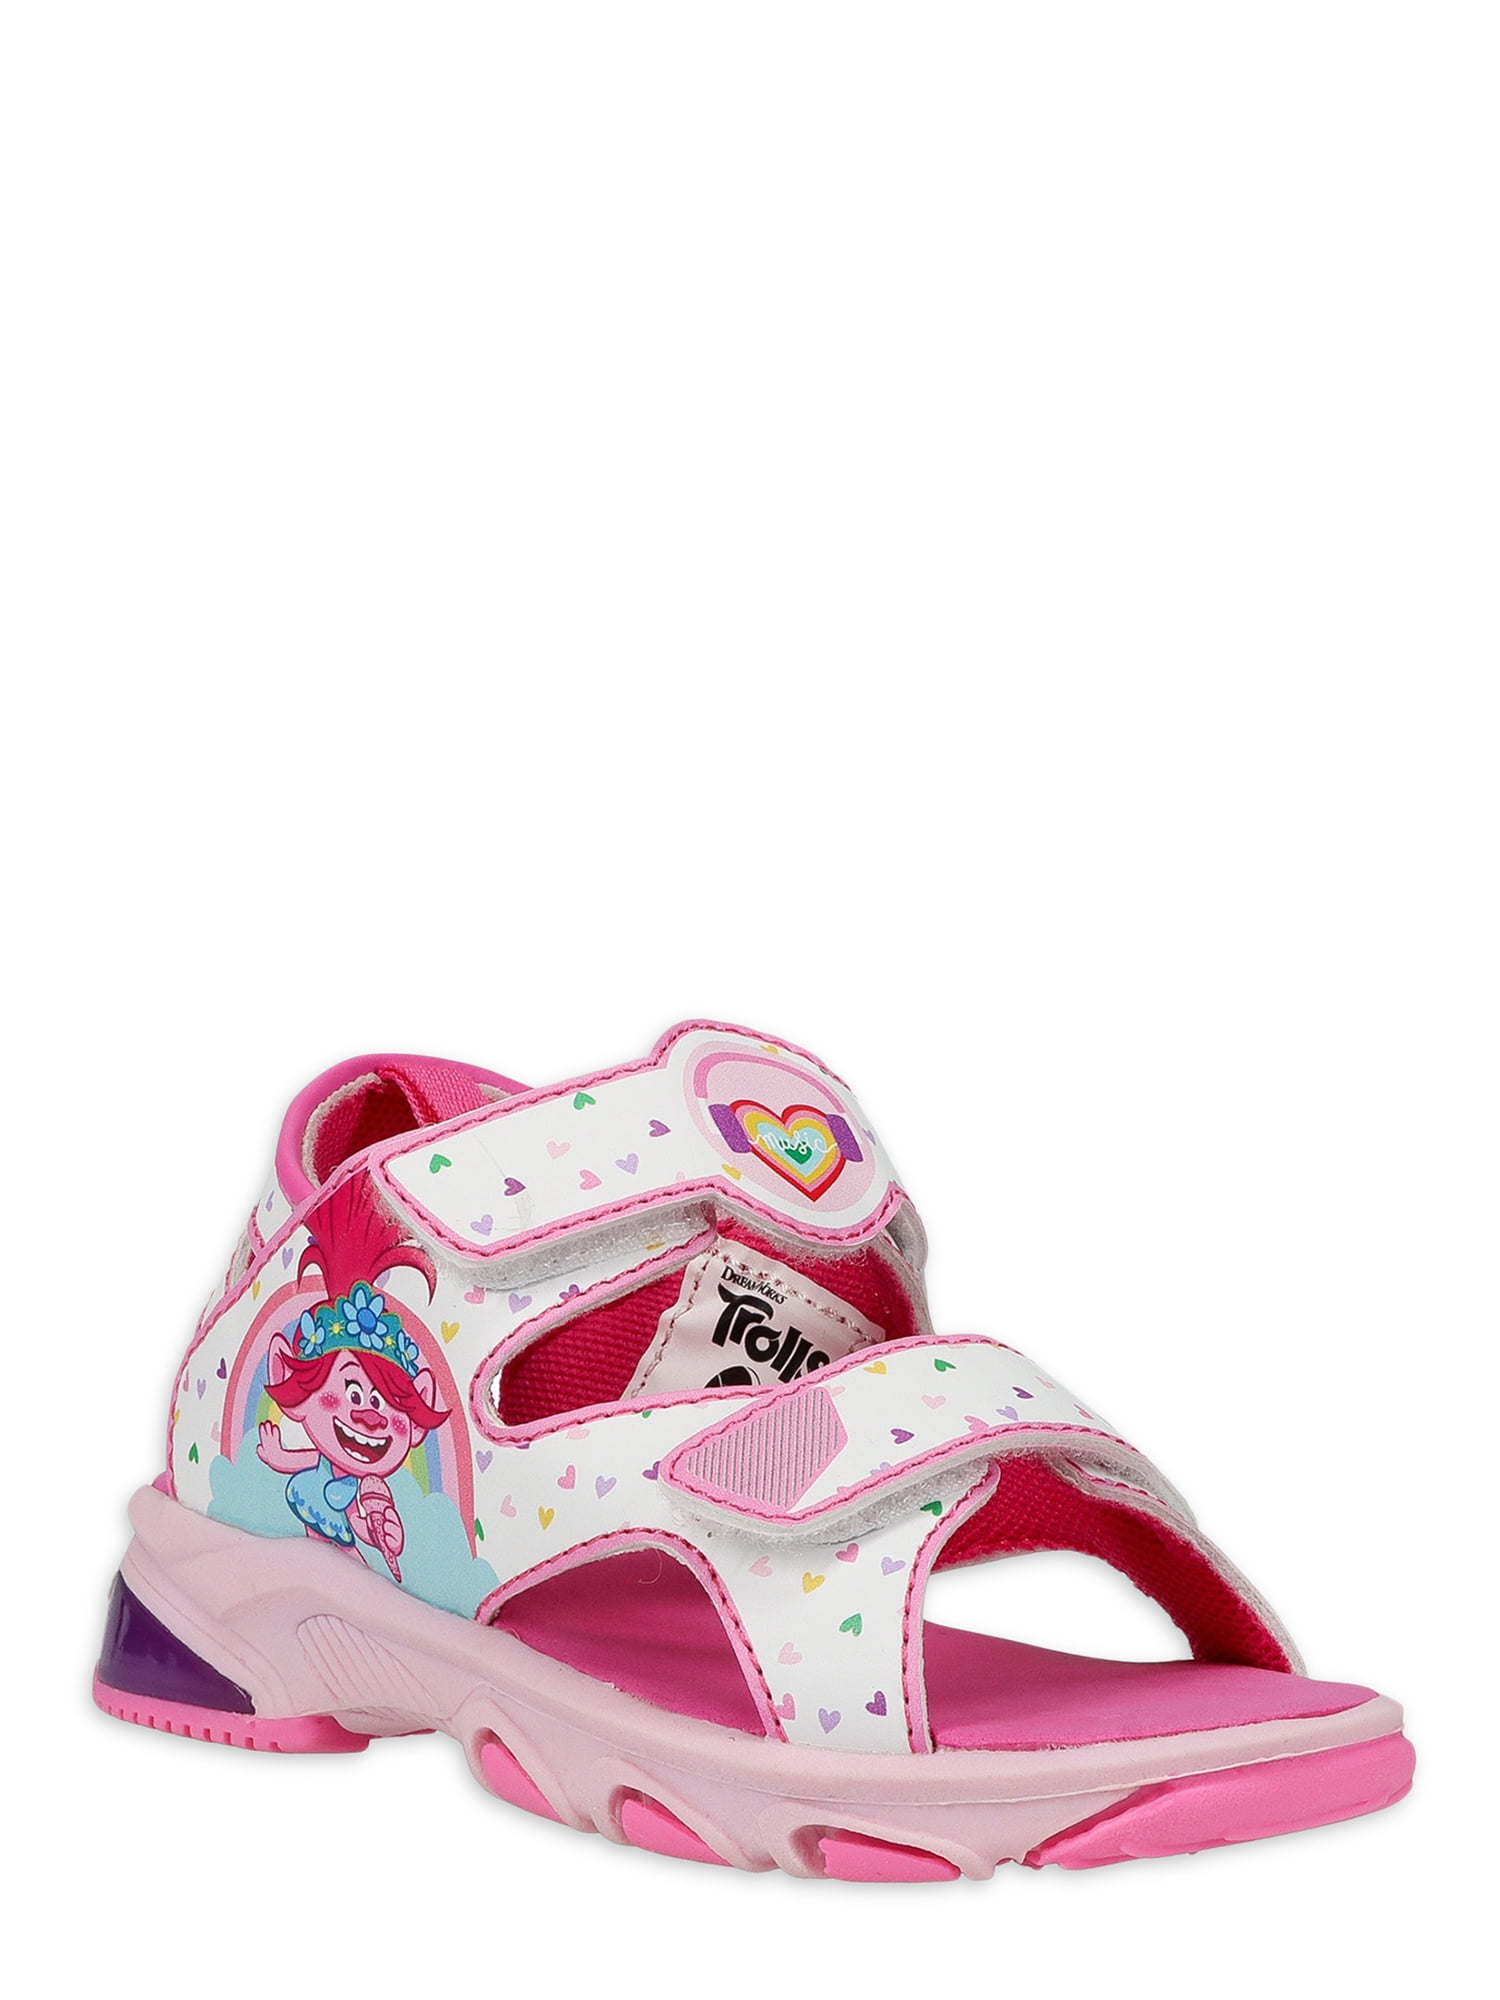 Trolls Girls Summer Sandals Adjustable Strap Sports Beach Shoes Poppy Kids Size 